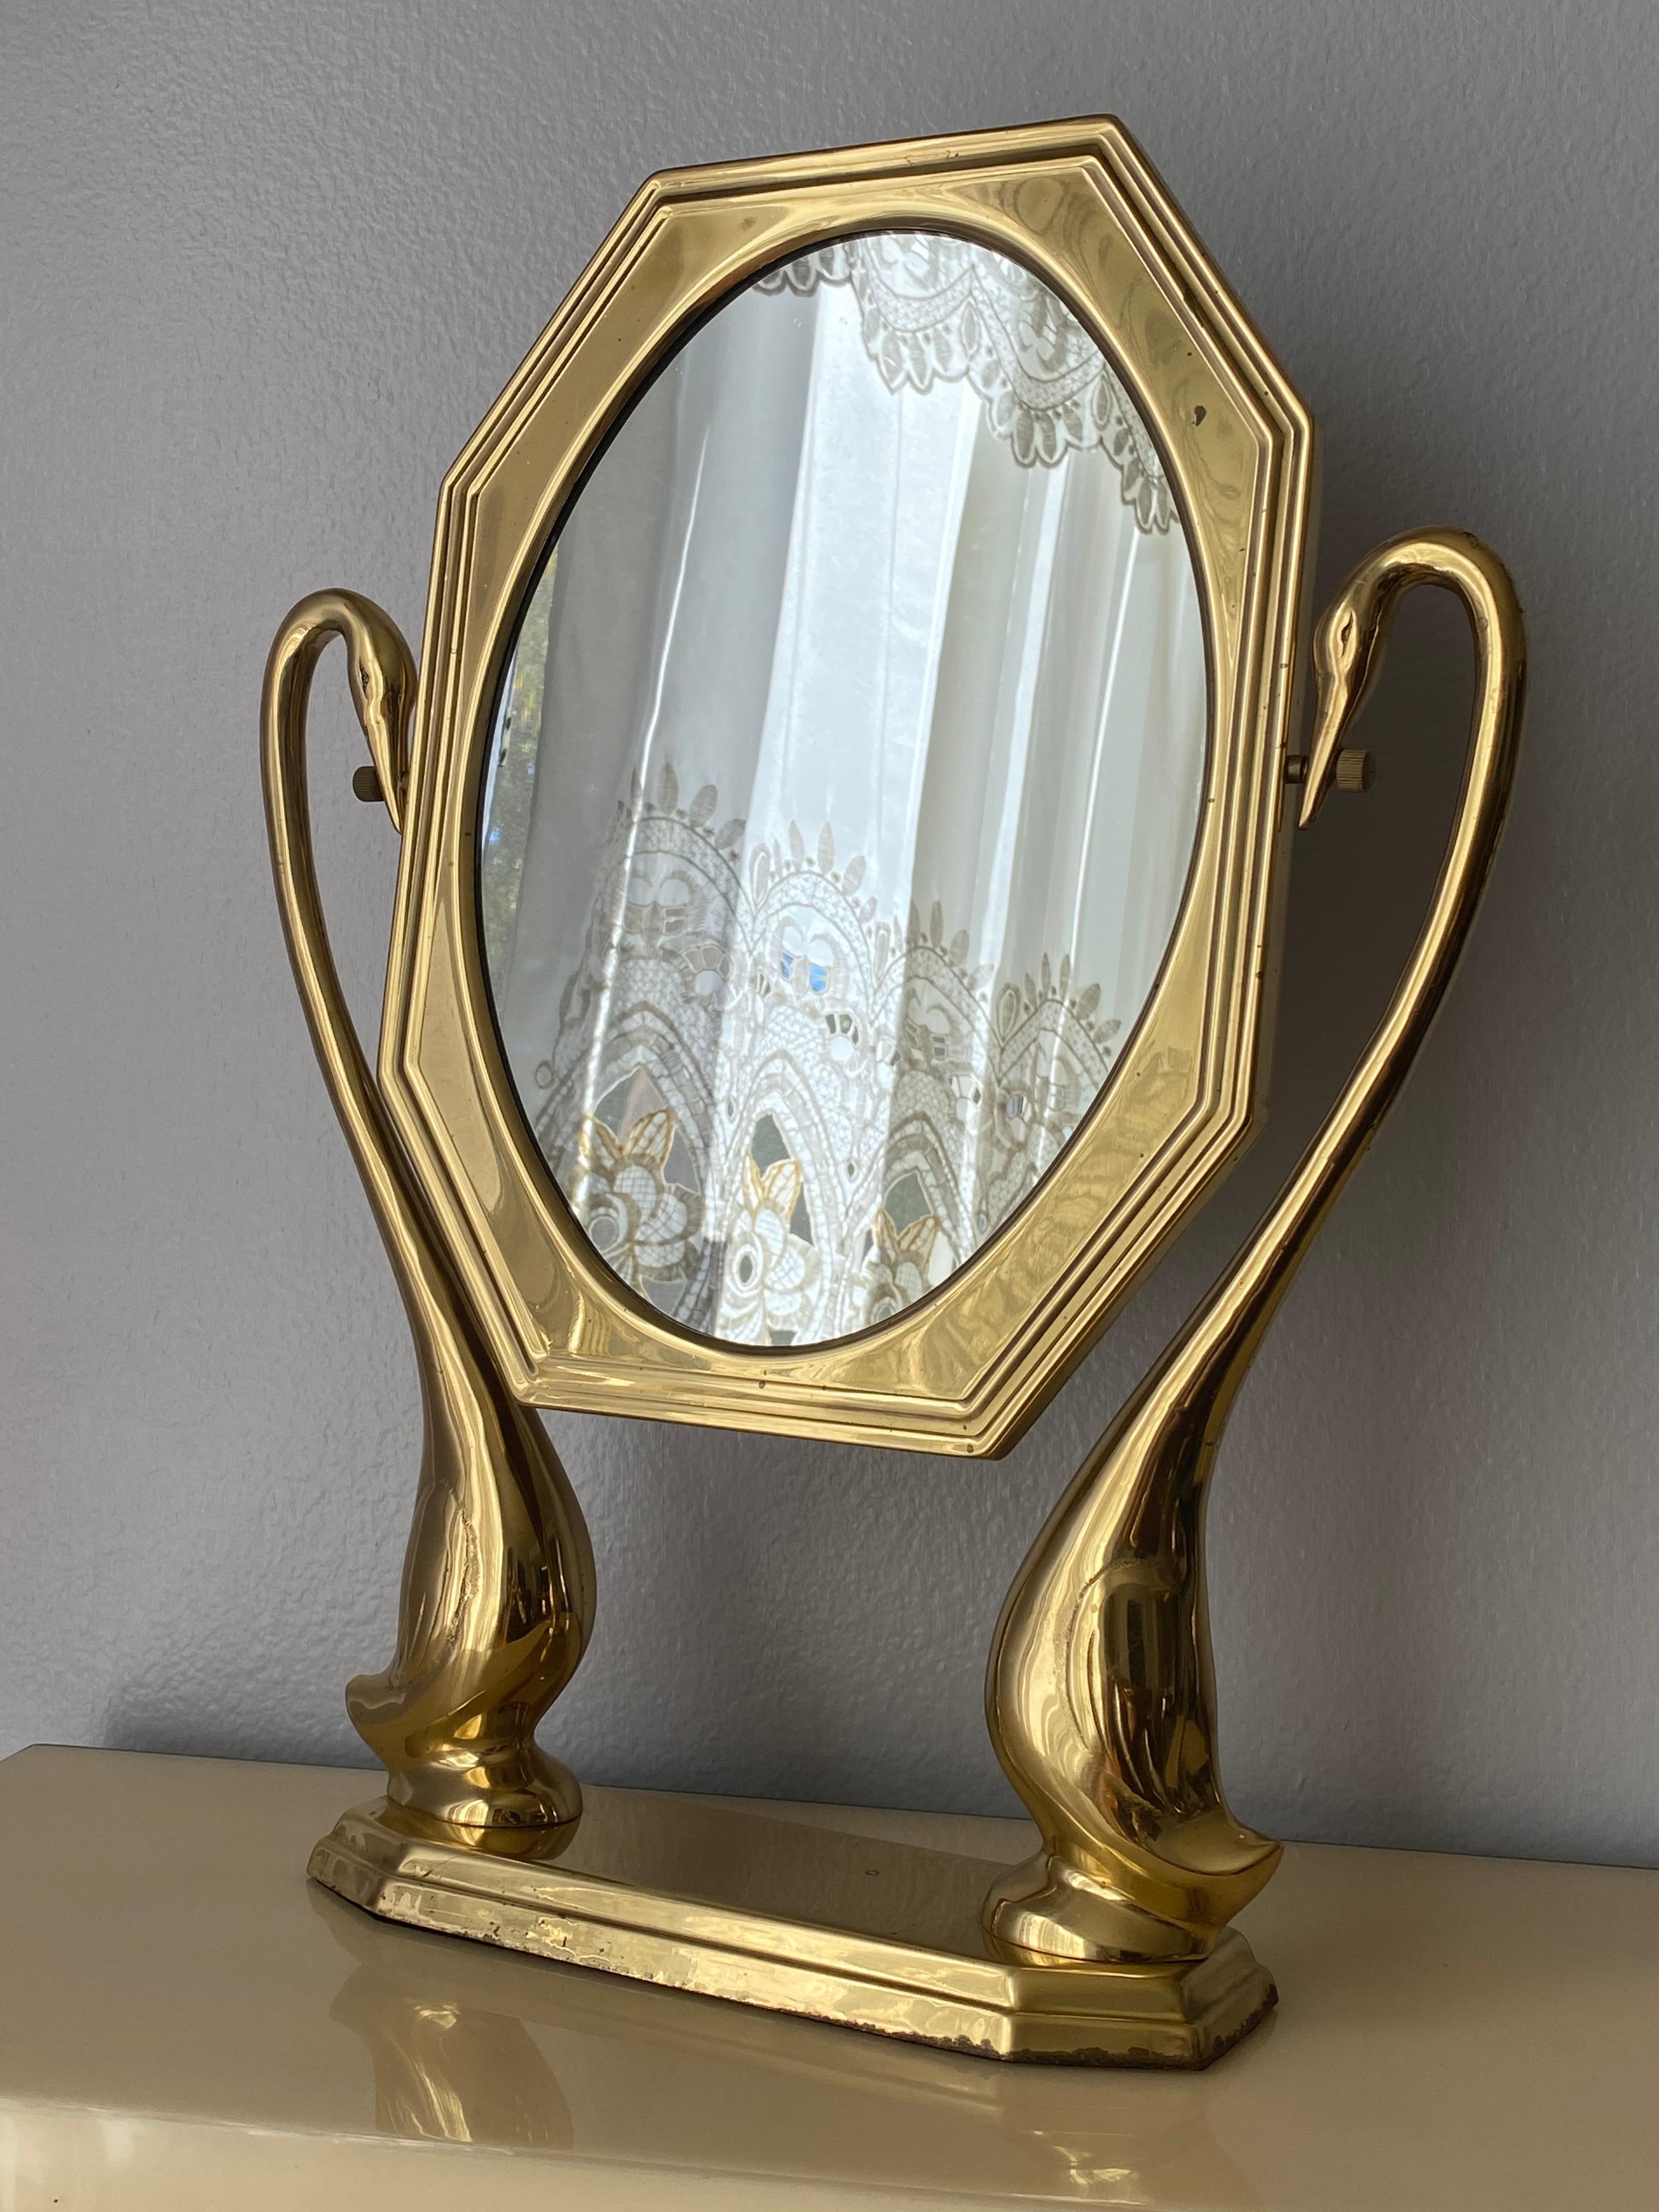 Brass swan motif vanity mirror. Oval mirror itself is 13.5